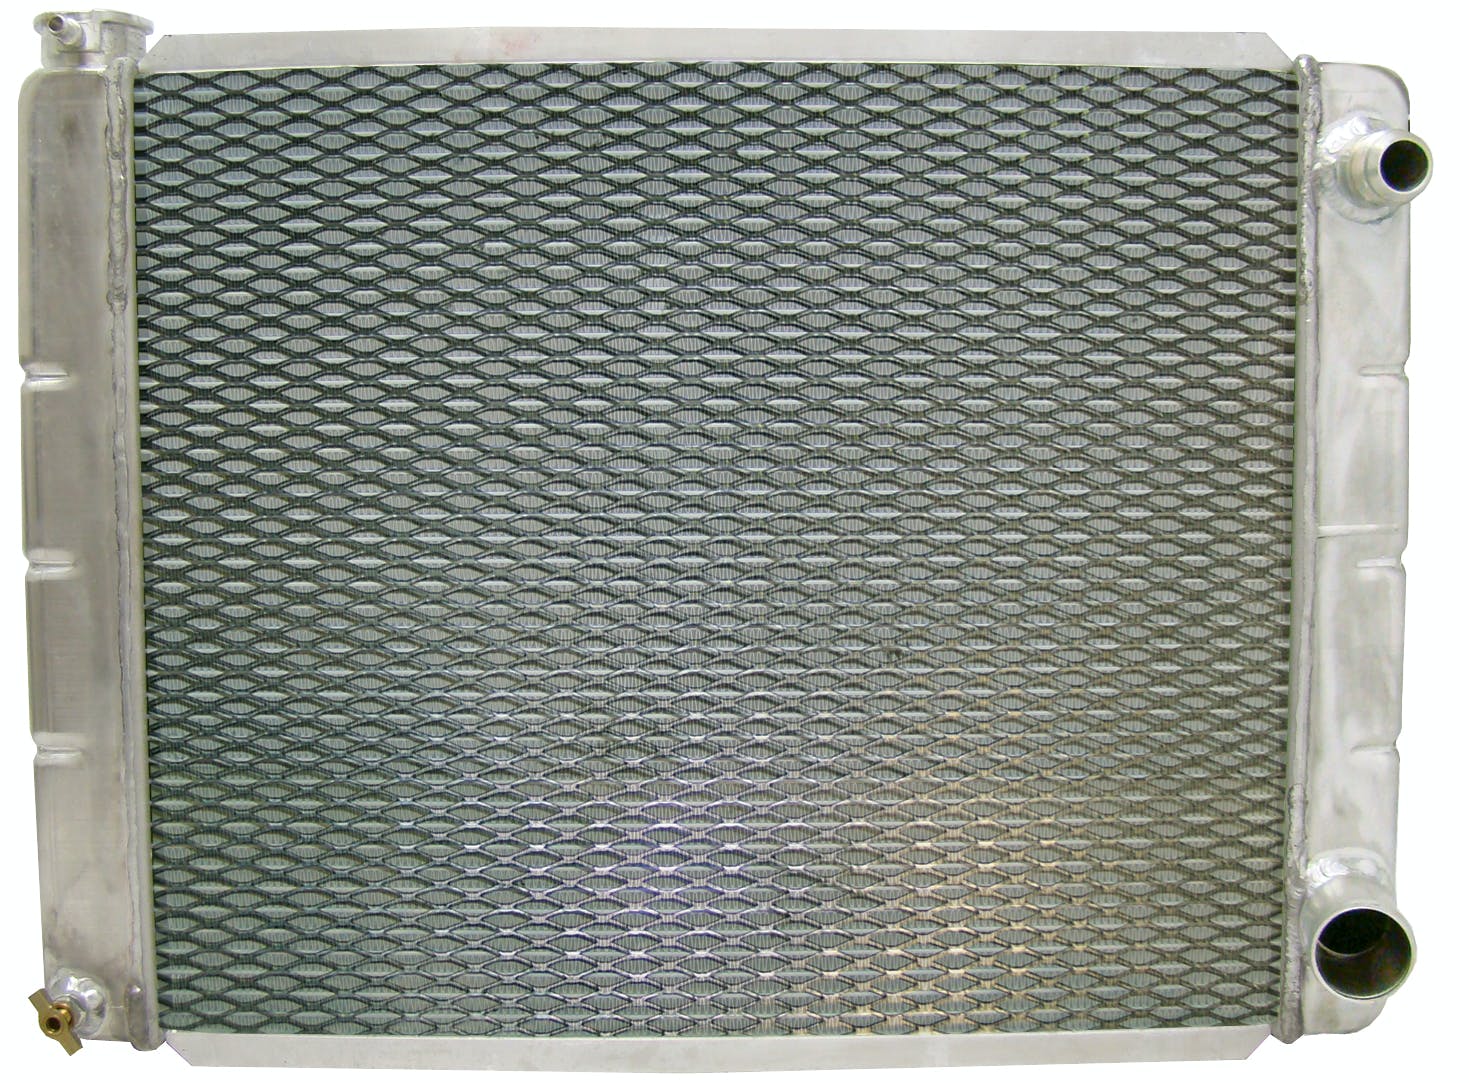 Northern Radiator Z96900 19 x 31 Shaker Screen